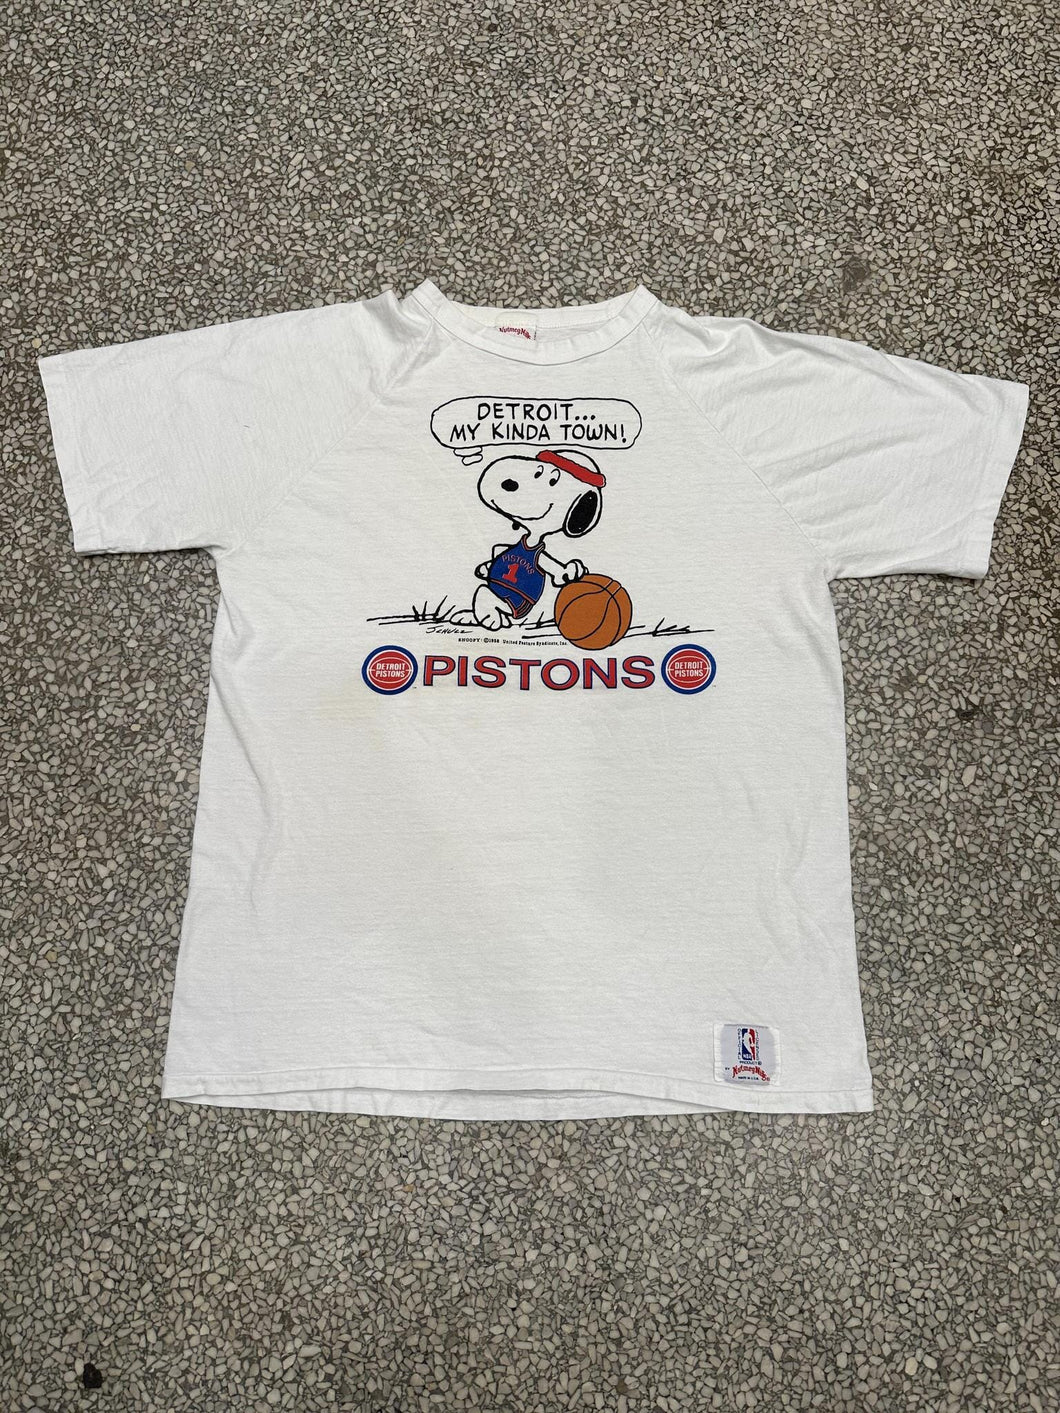 Detroit Pistons Vintage 80s Snoopy Detroit My Kinda Town Rare ABC Vintage 